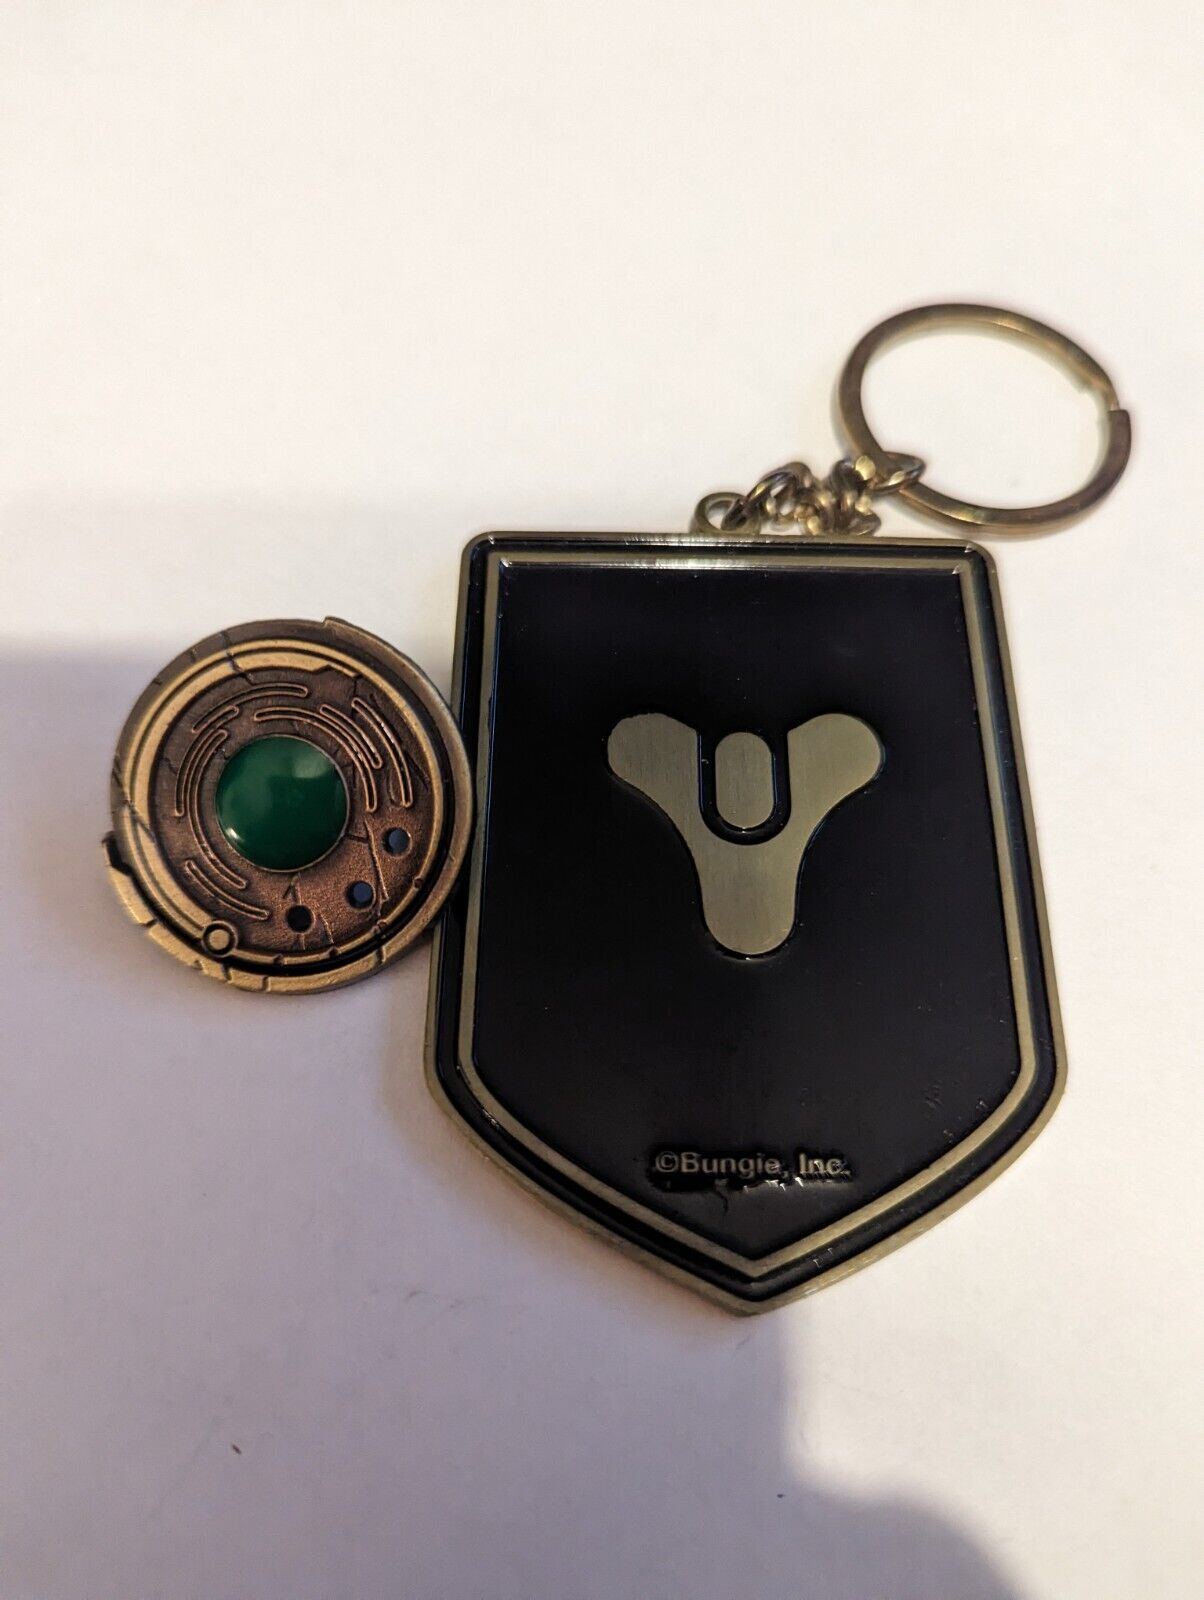 Destiny 2 Strange Coin Augment September 2017 And GameStop Keychain Hunter